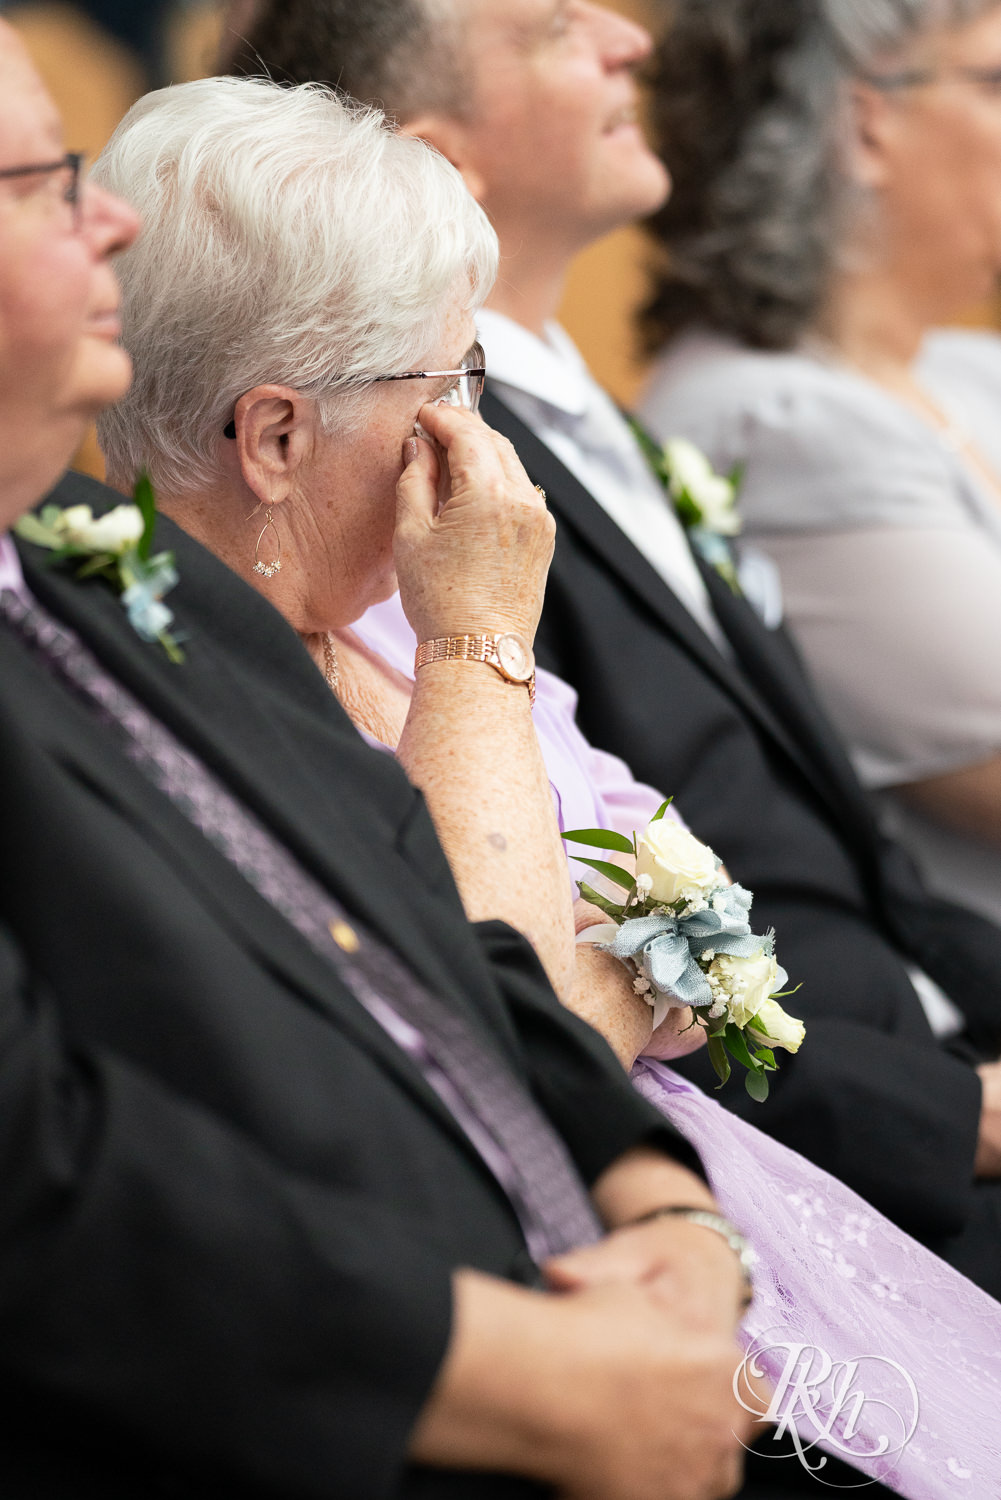 Groom's grandma cries during wedding ceremony at Doubletree Hilton Saint Paul in Saint Paul, Minnesota.